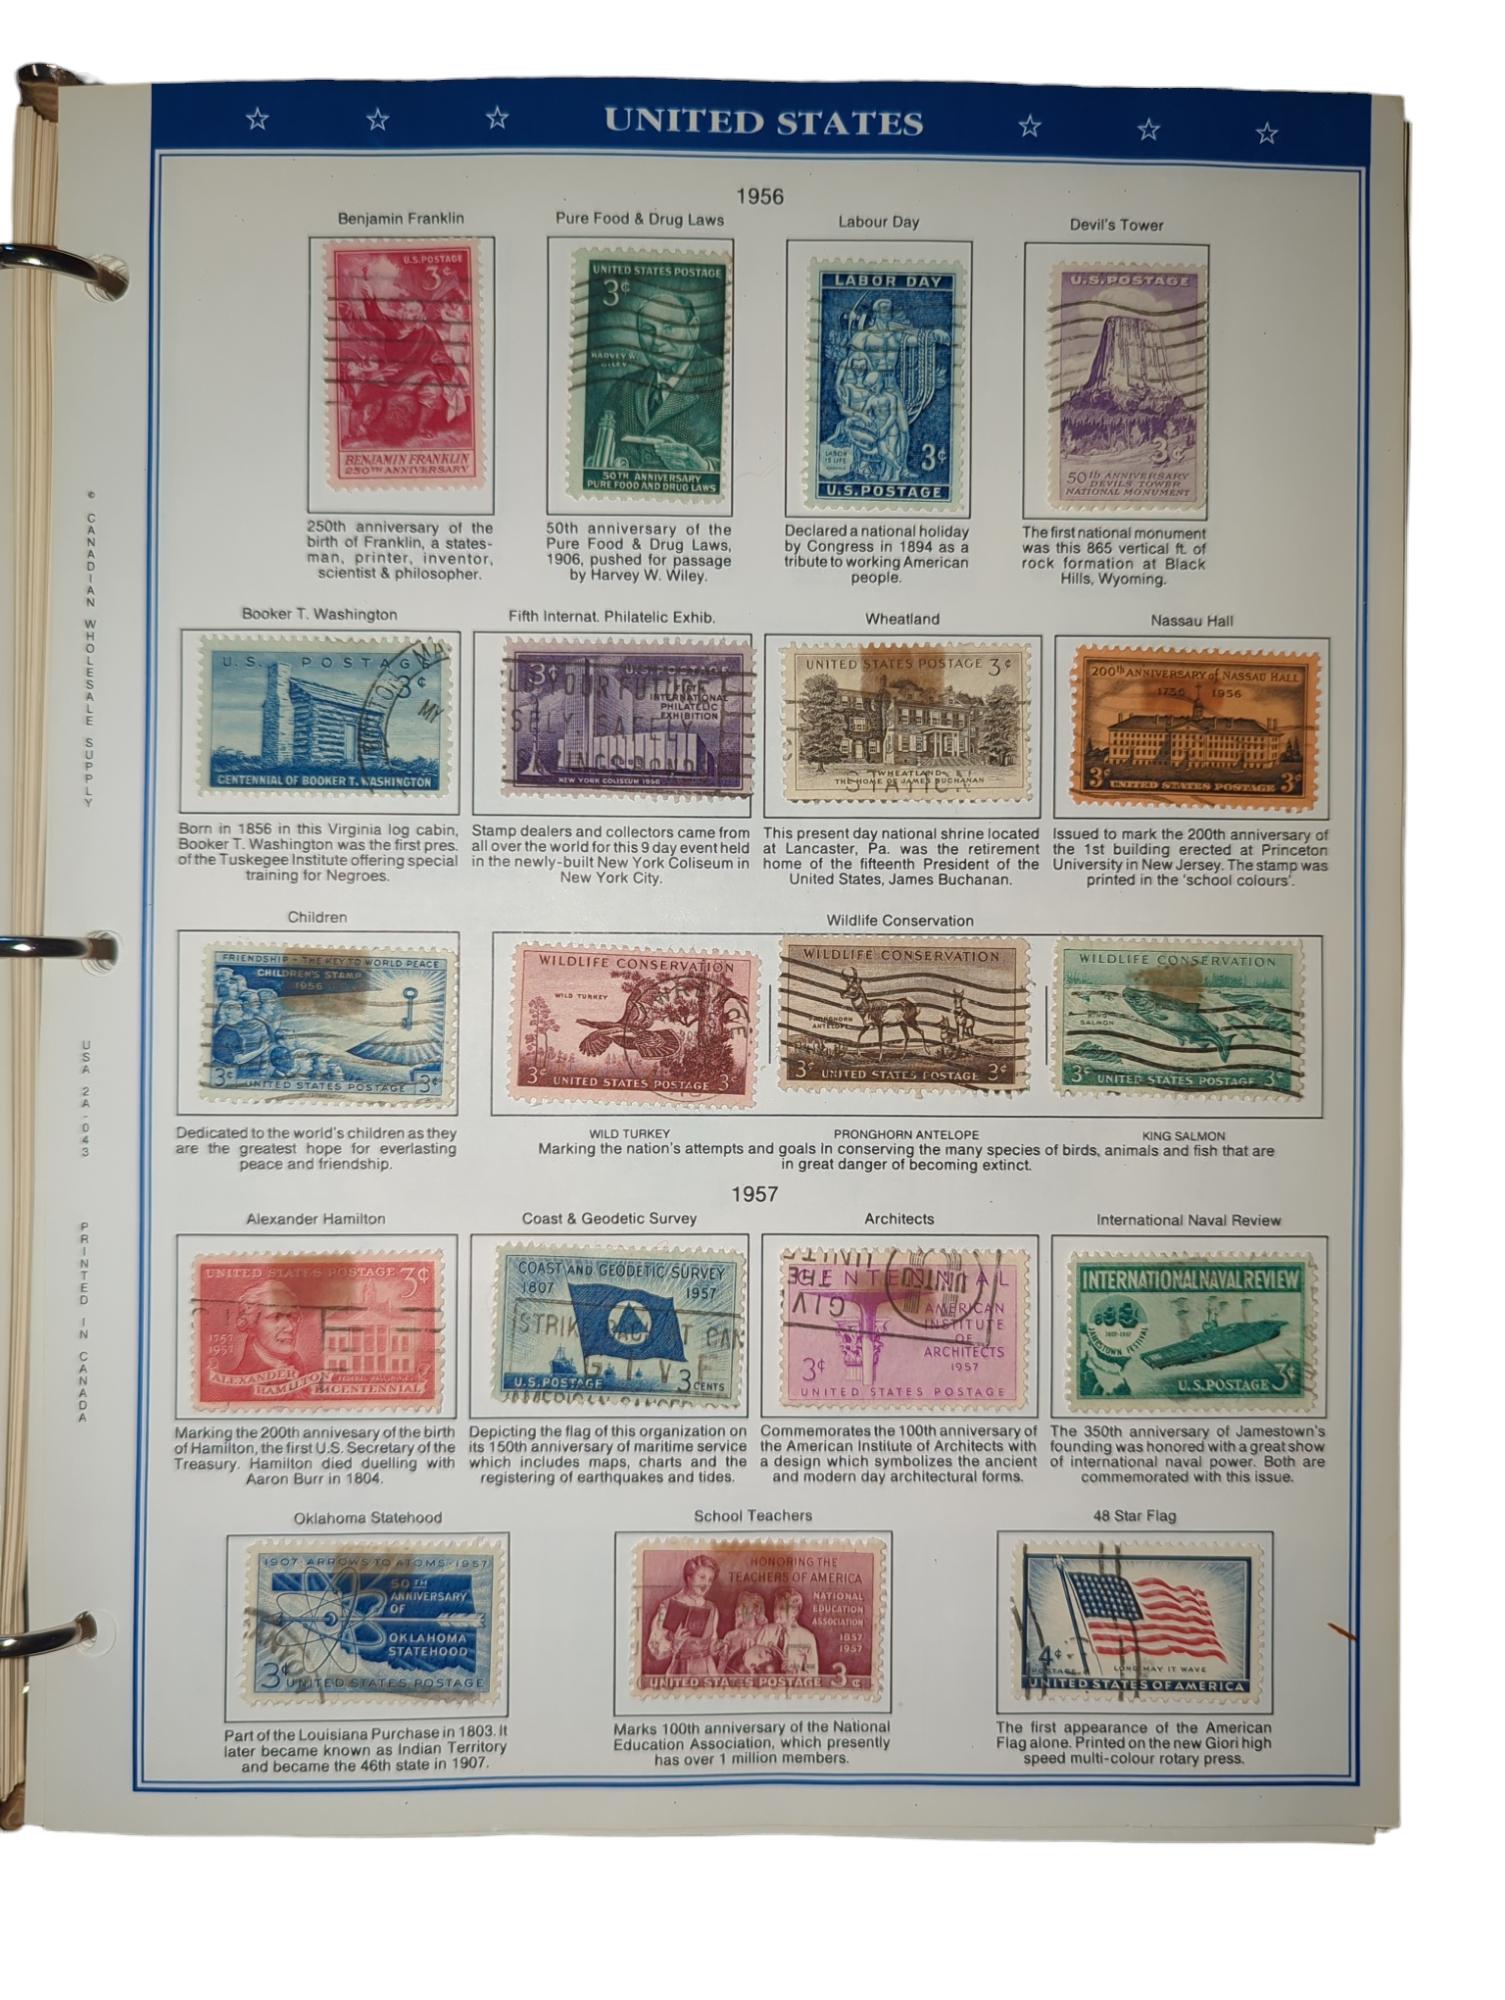 Vintage Presidents United States Stamp Album